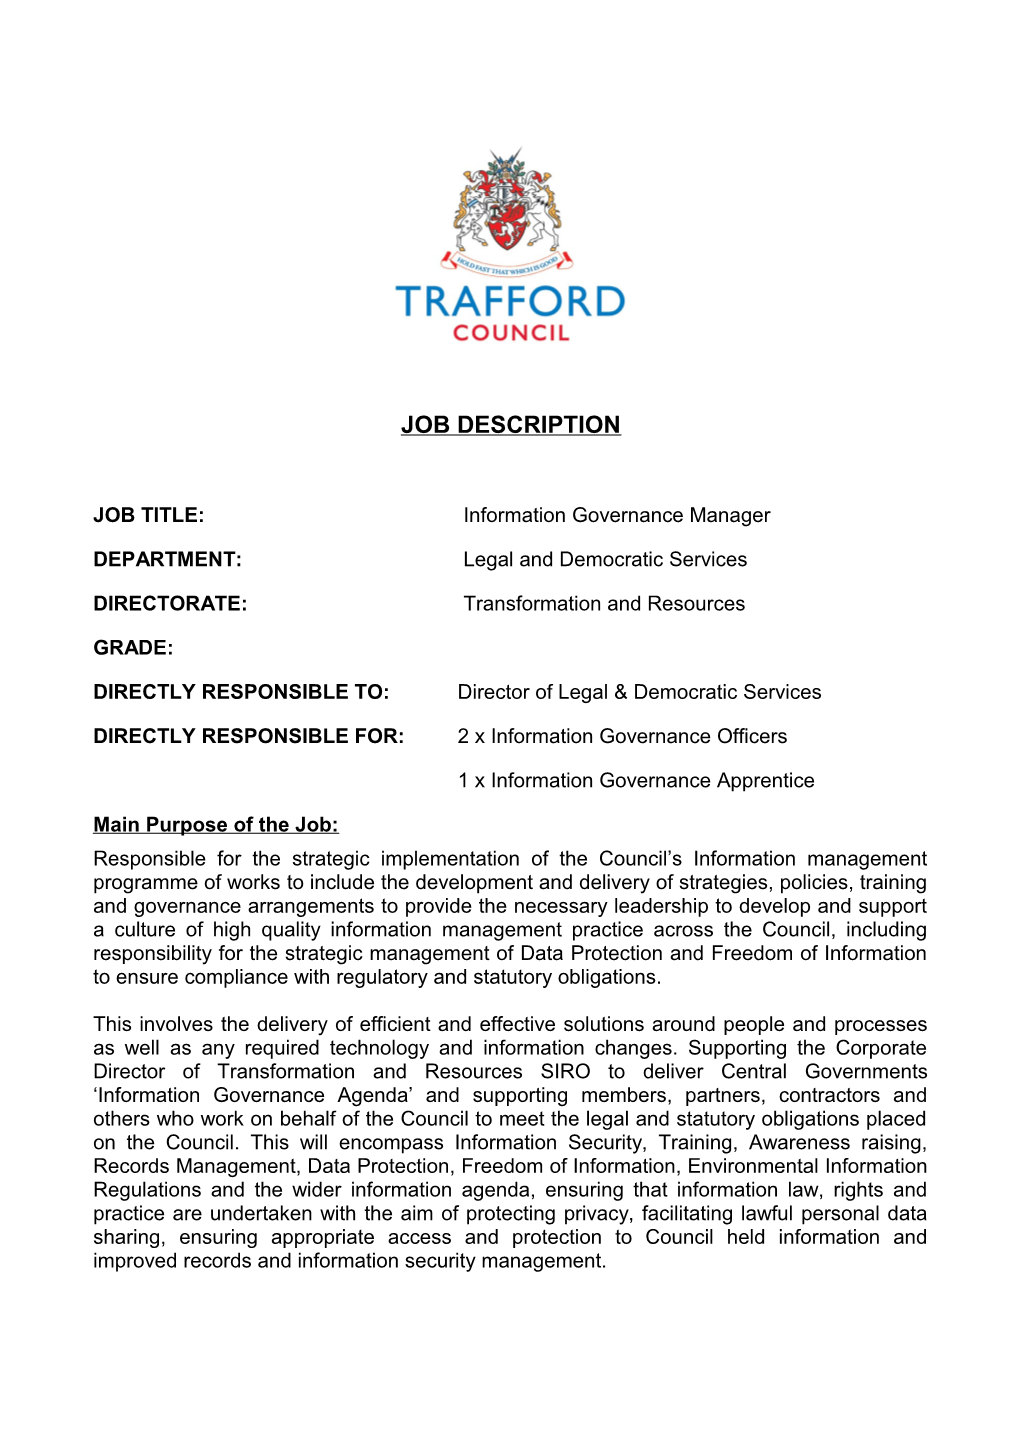 Trafford Job Description Template